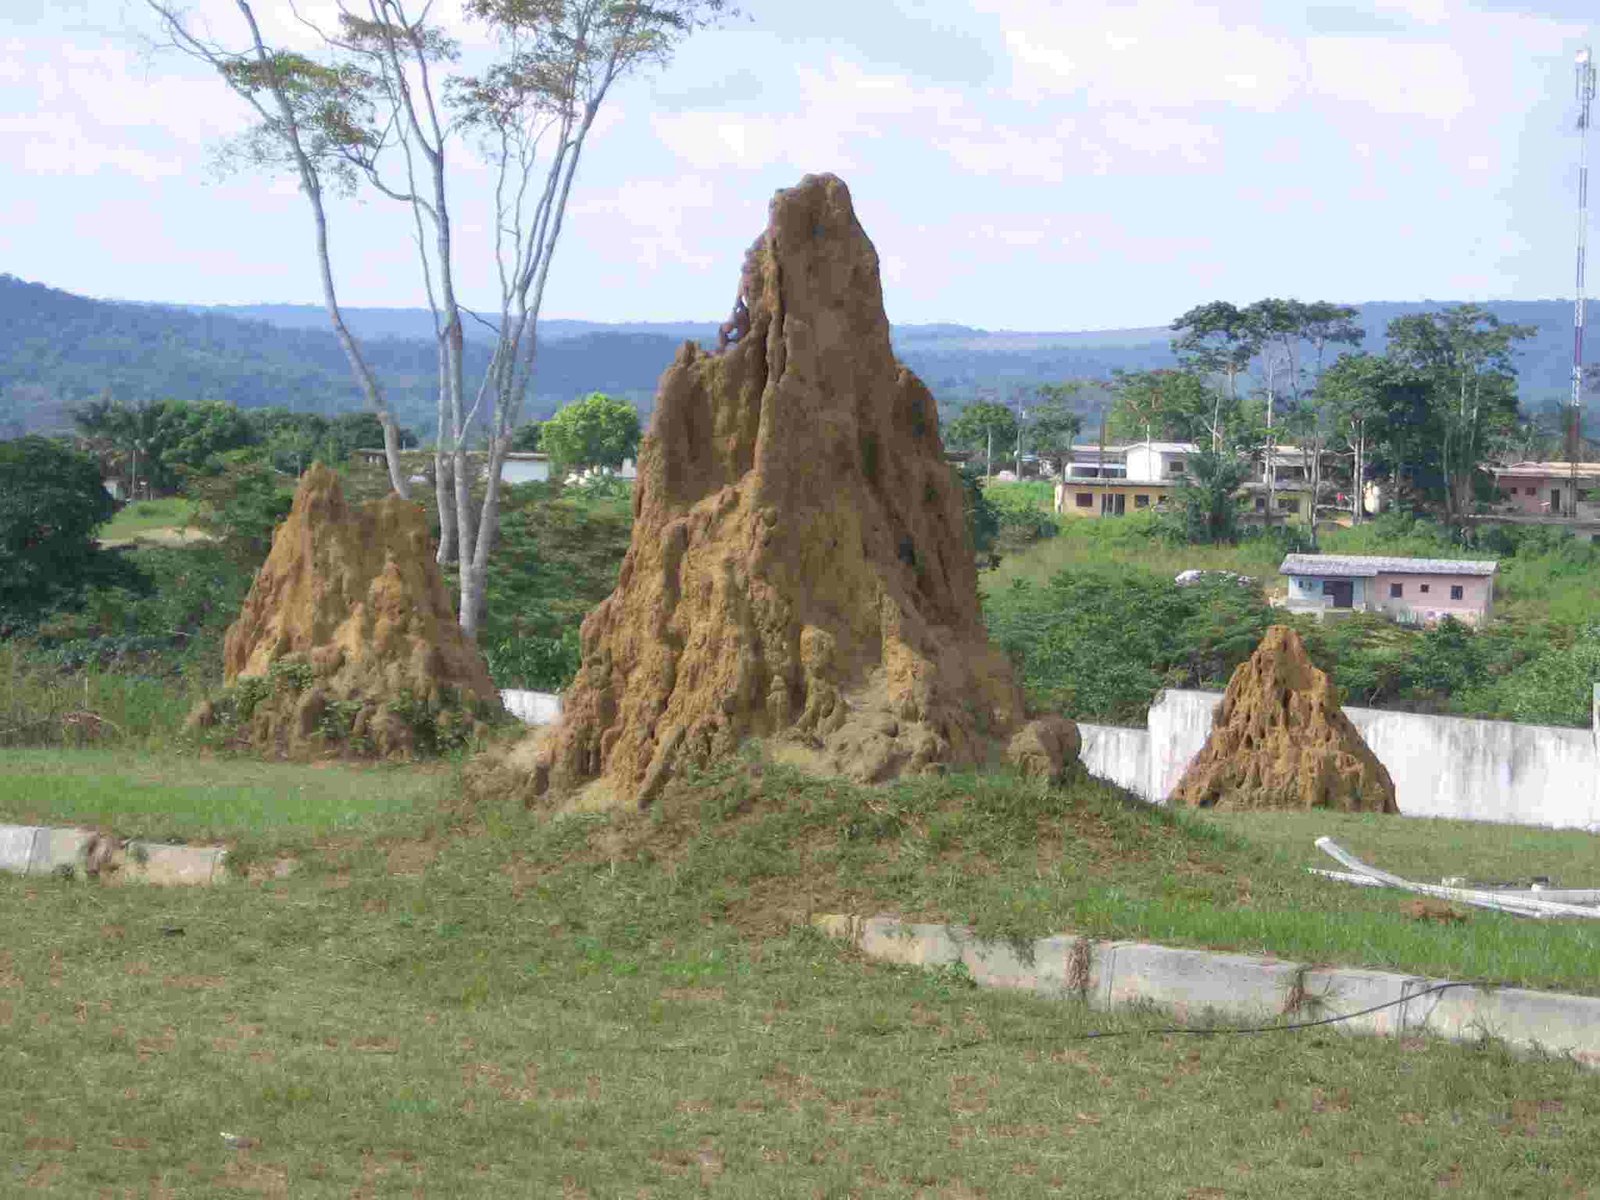 Huge termite mounds